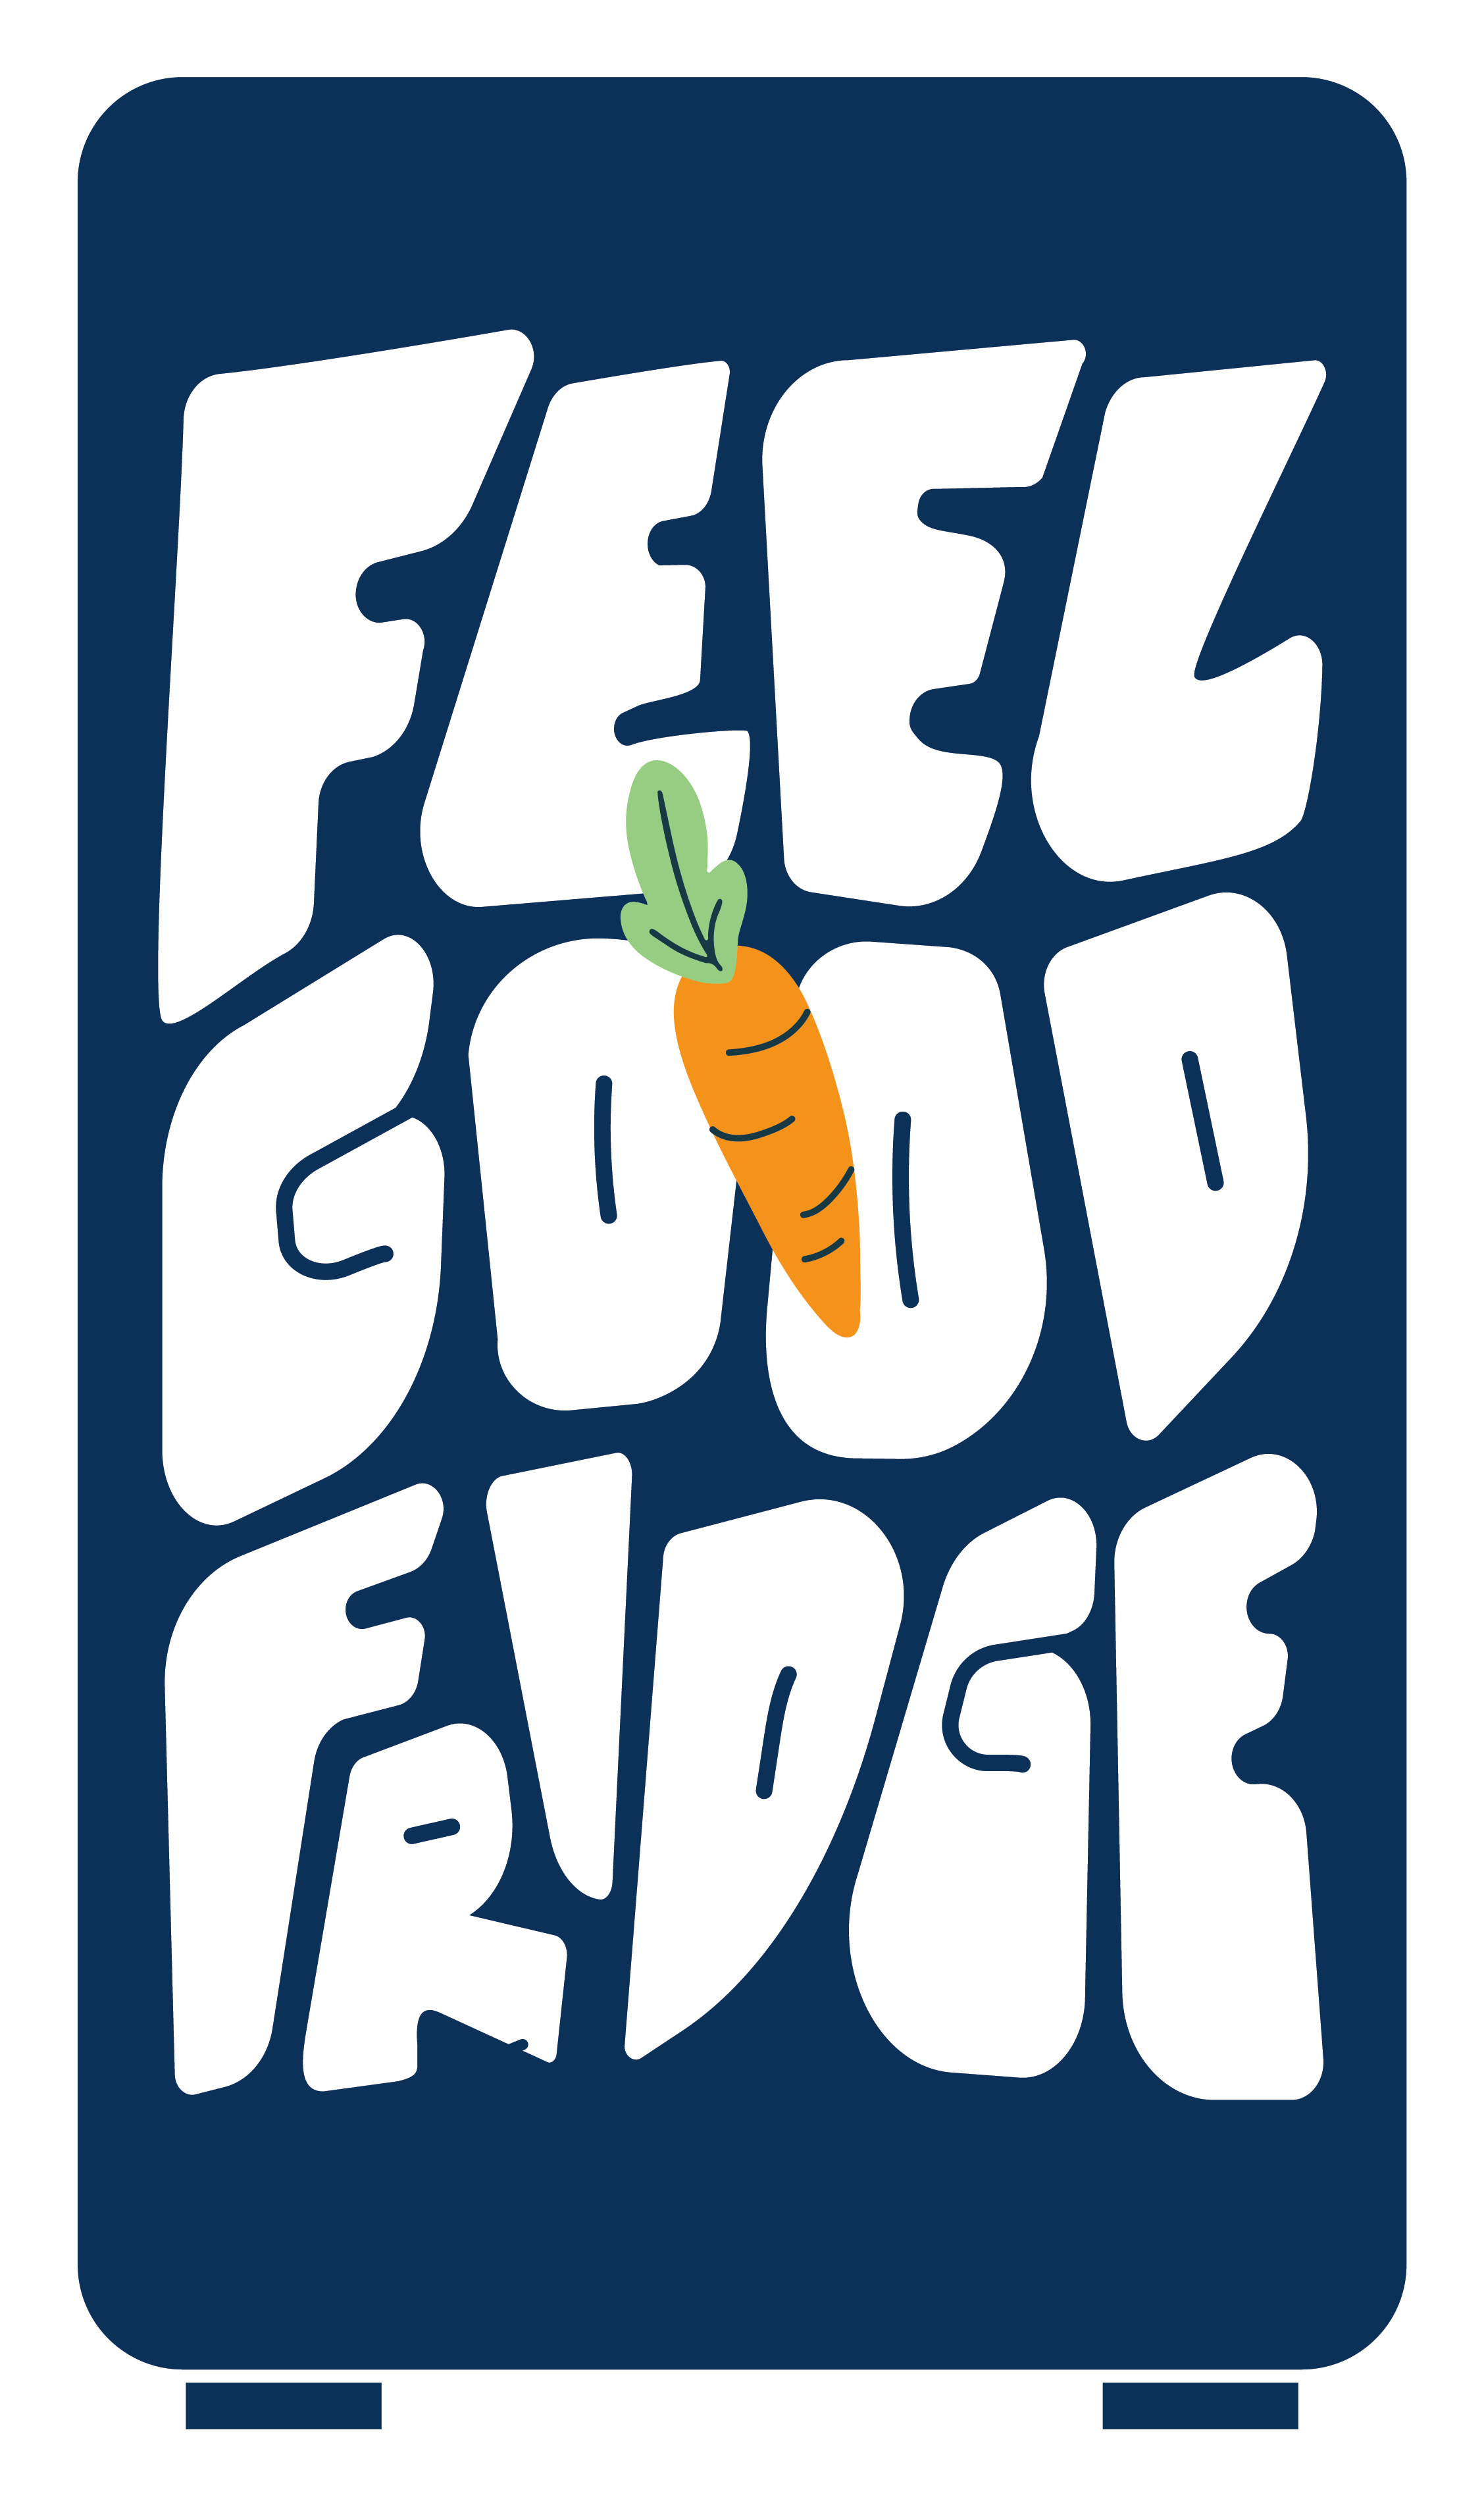 Feel good fridge generic logo